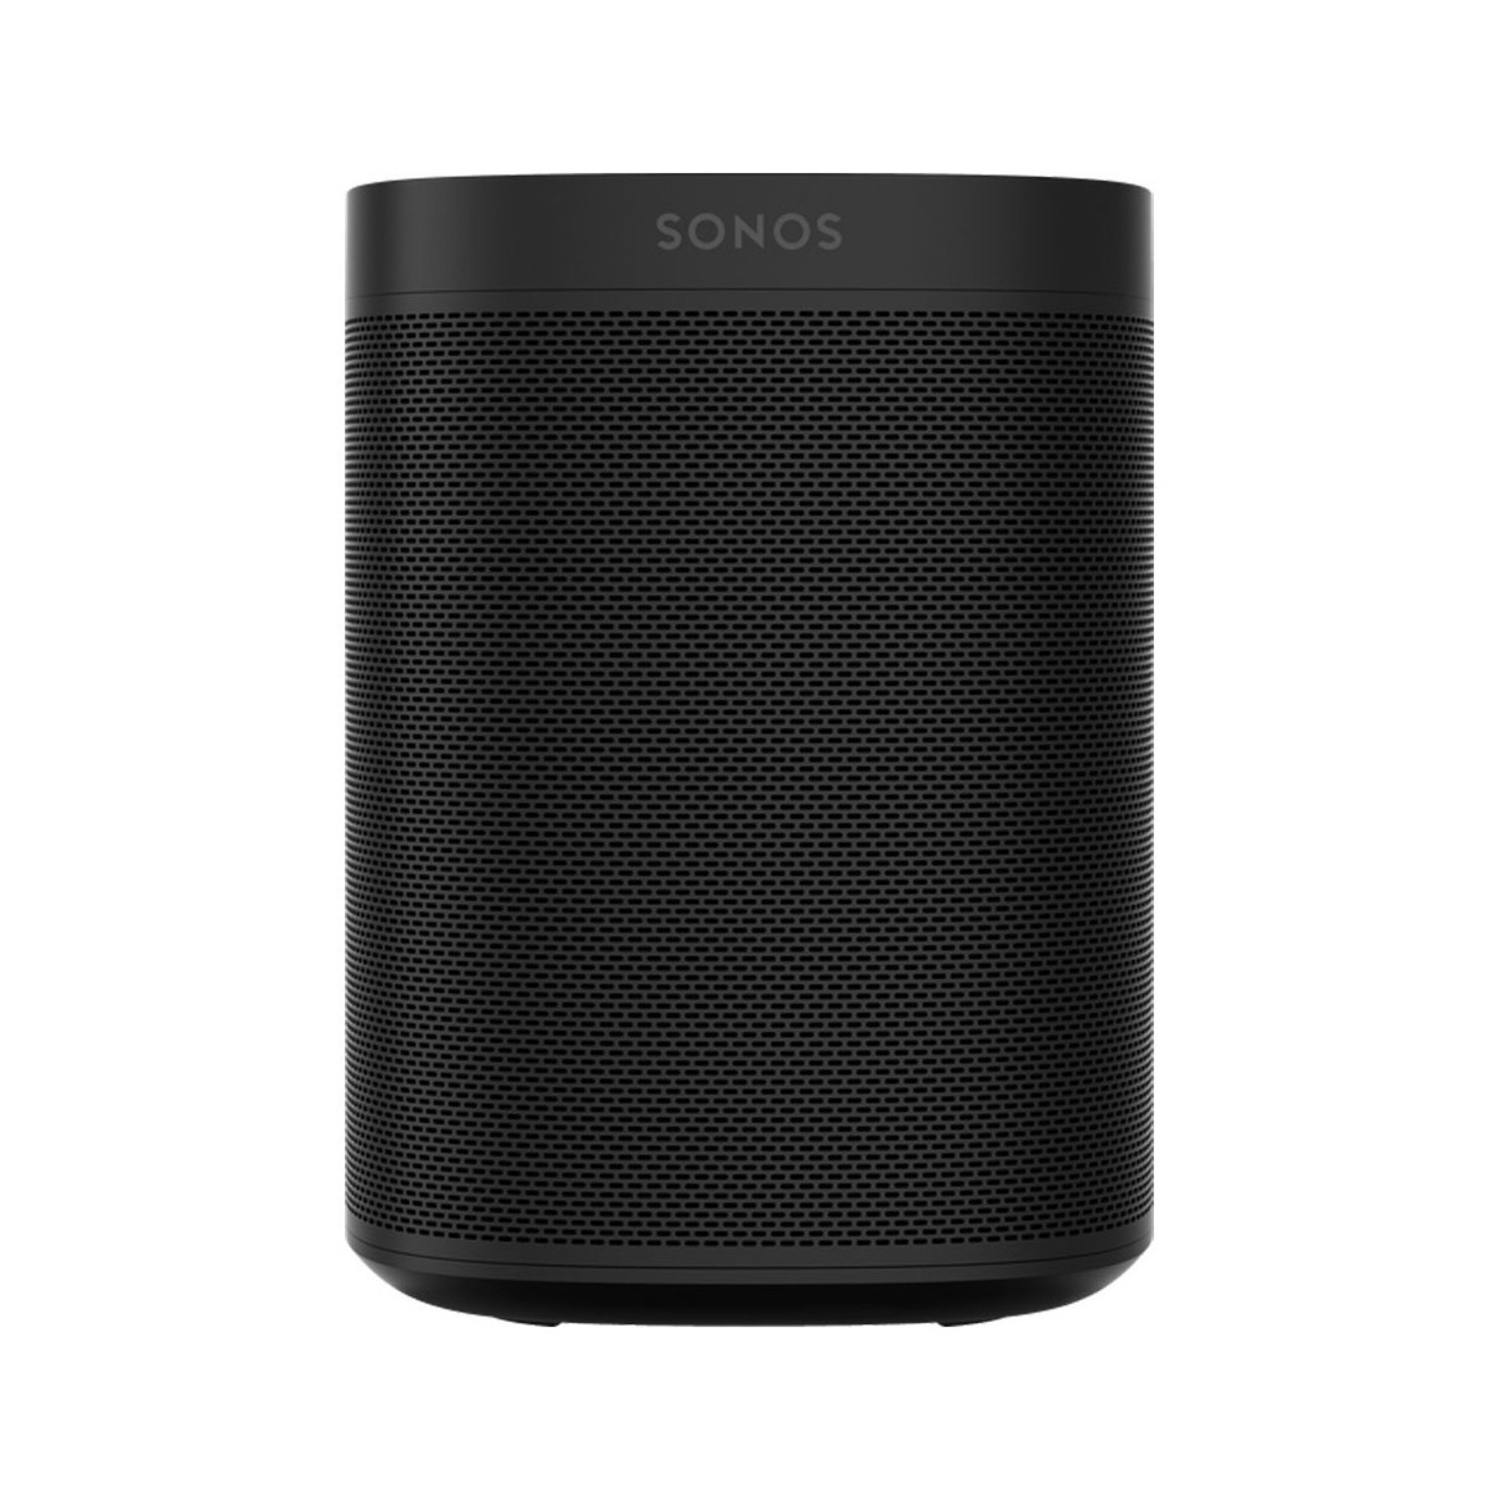 Sonos ONE smart speaker with Google Assist and Amazon Alexa voice control - black - 4